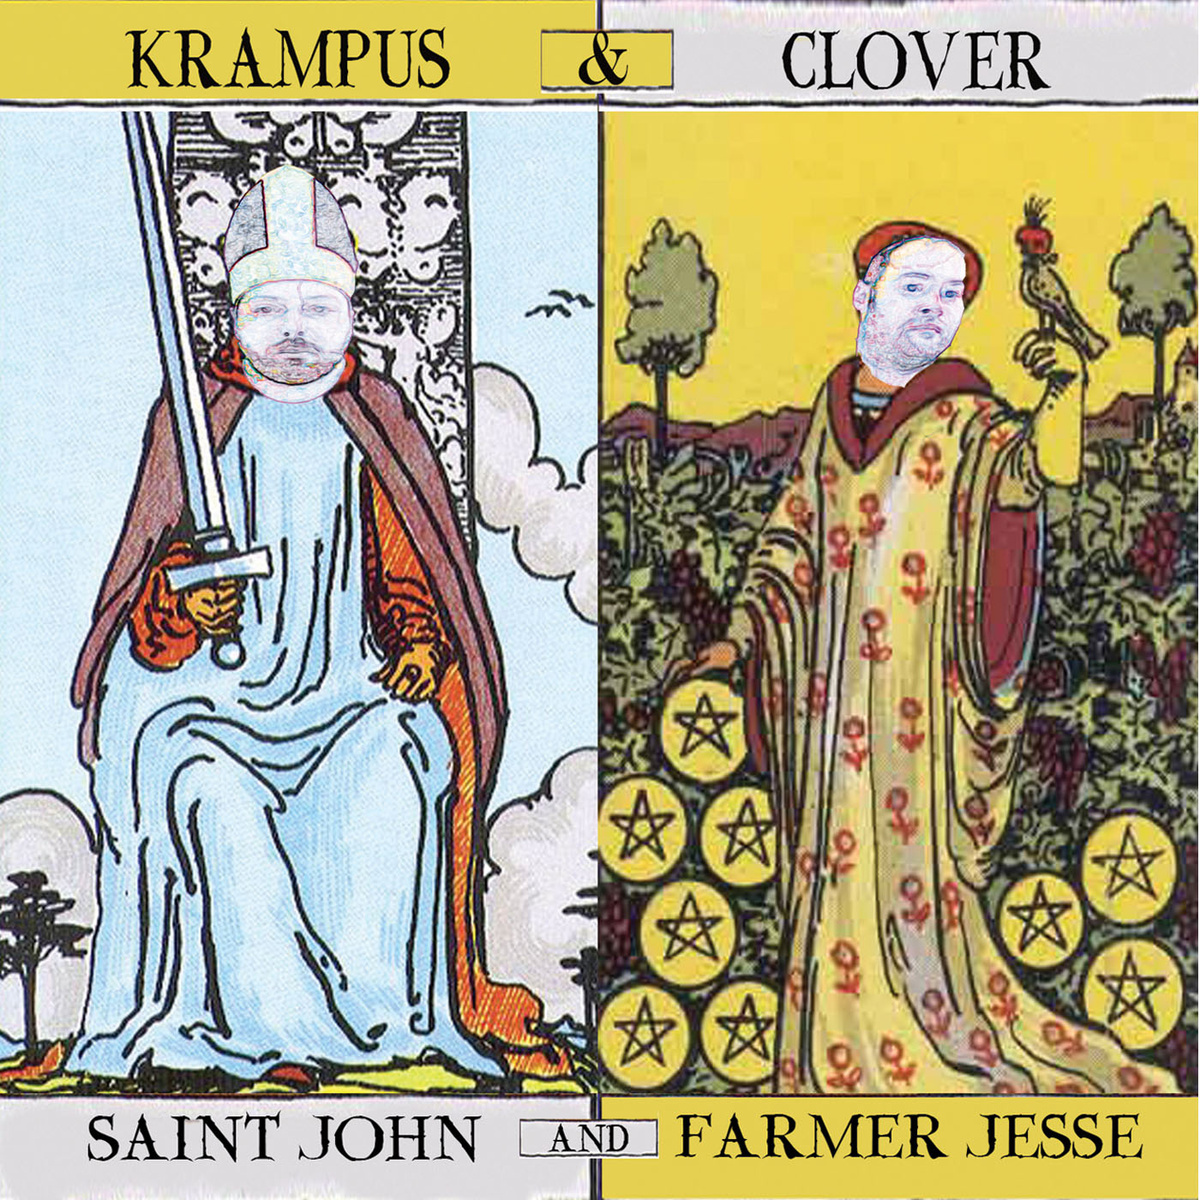 Saint John and Farmer Jesse